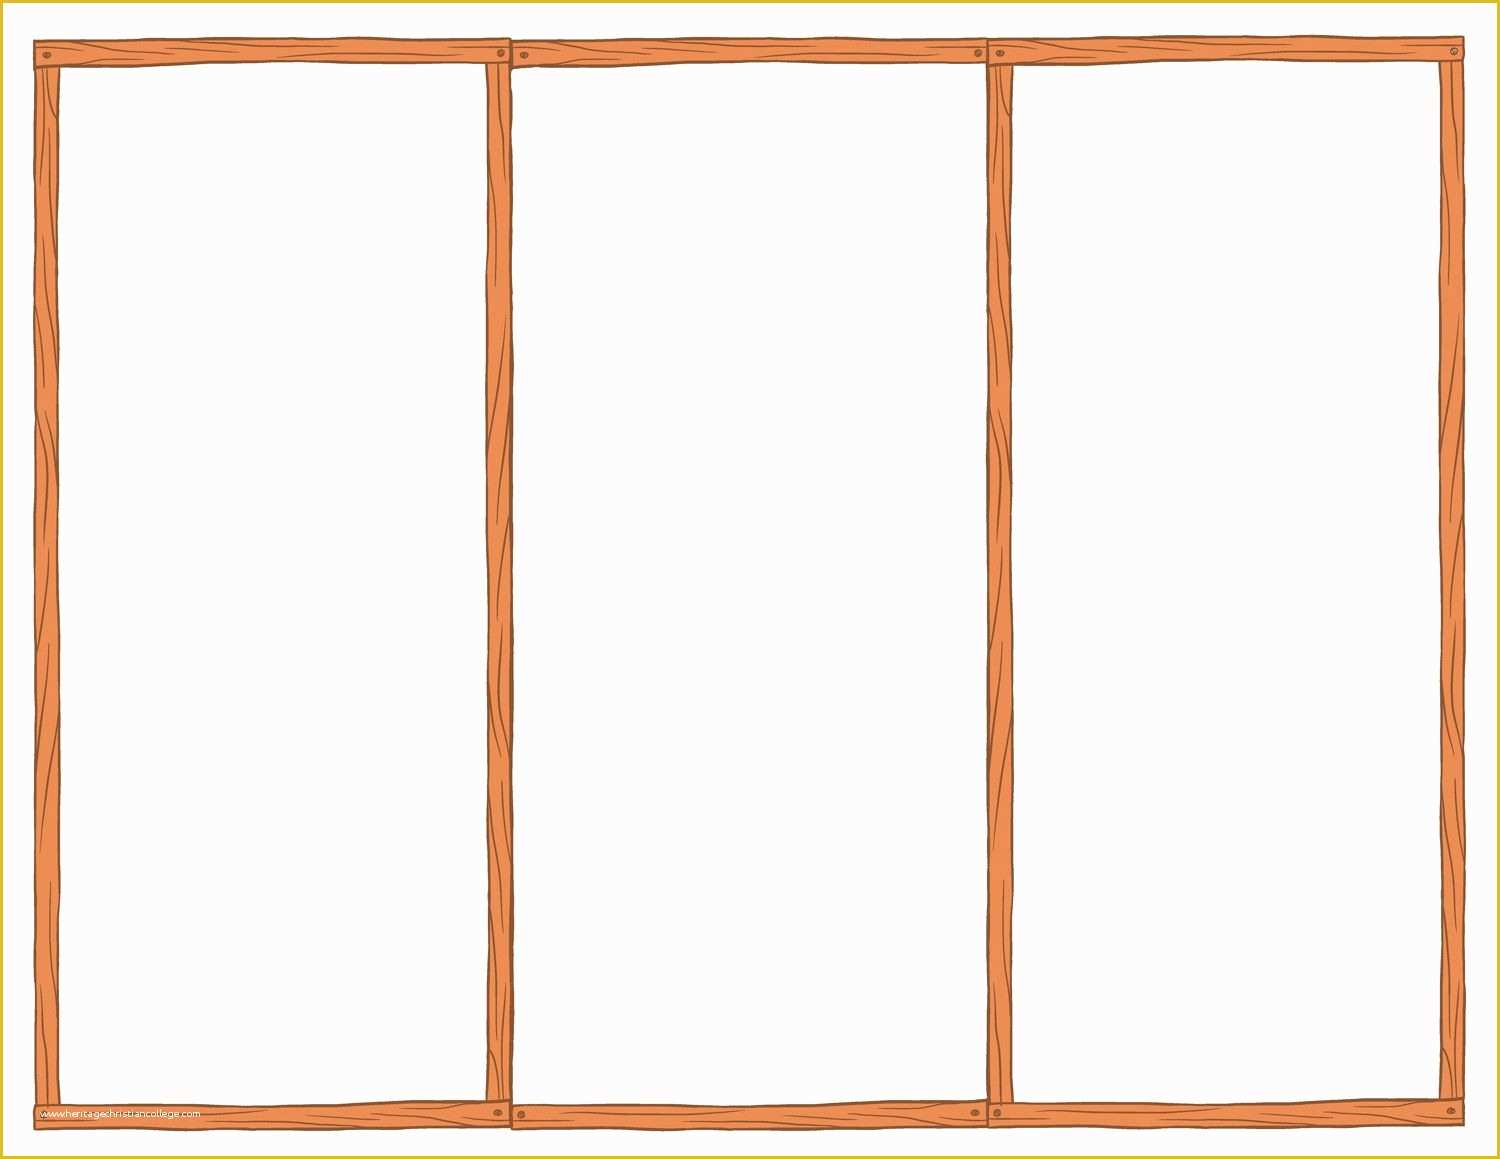 Blank Tri Fold Brochure Template Free Download Of Blank Tri Fold Brochure Template